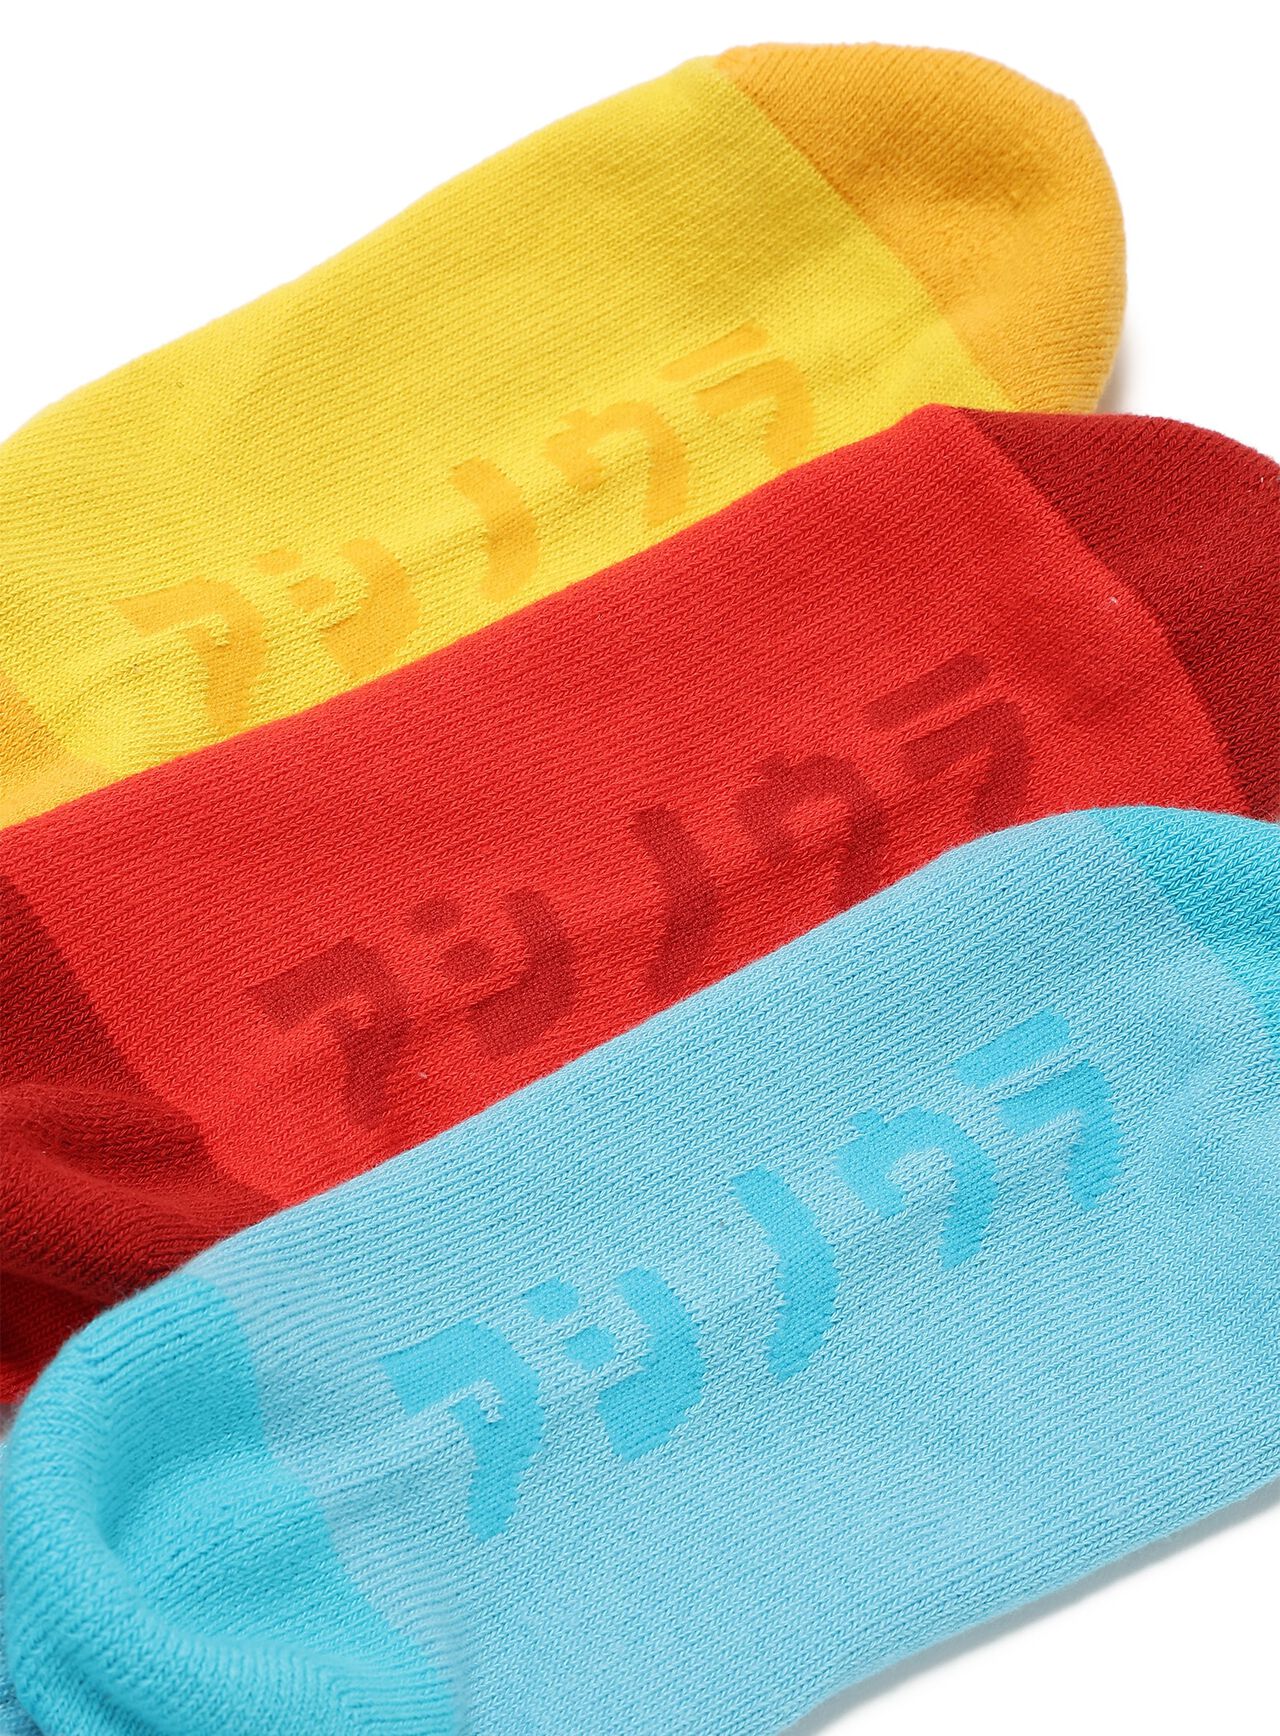 THLJ Souvenir Fire Socks,ONE, large image number 5